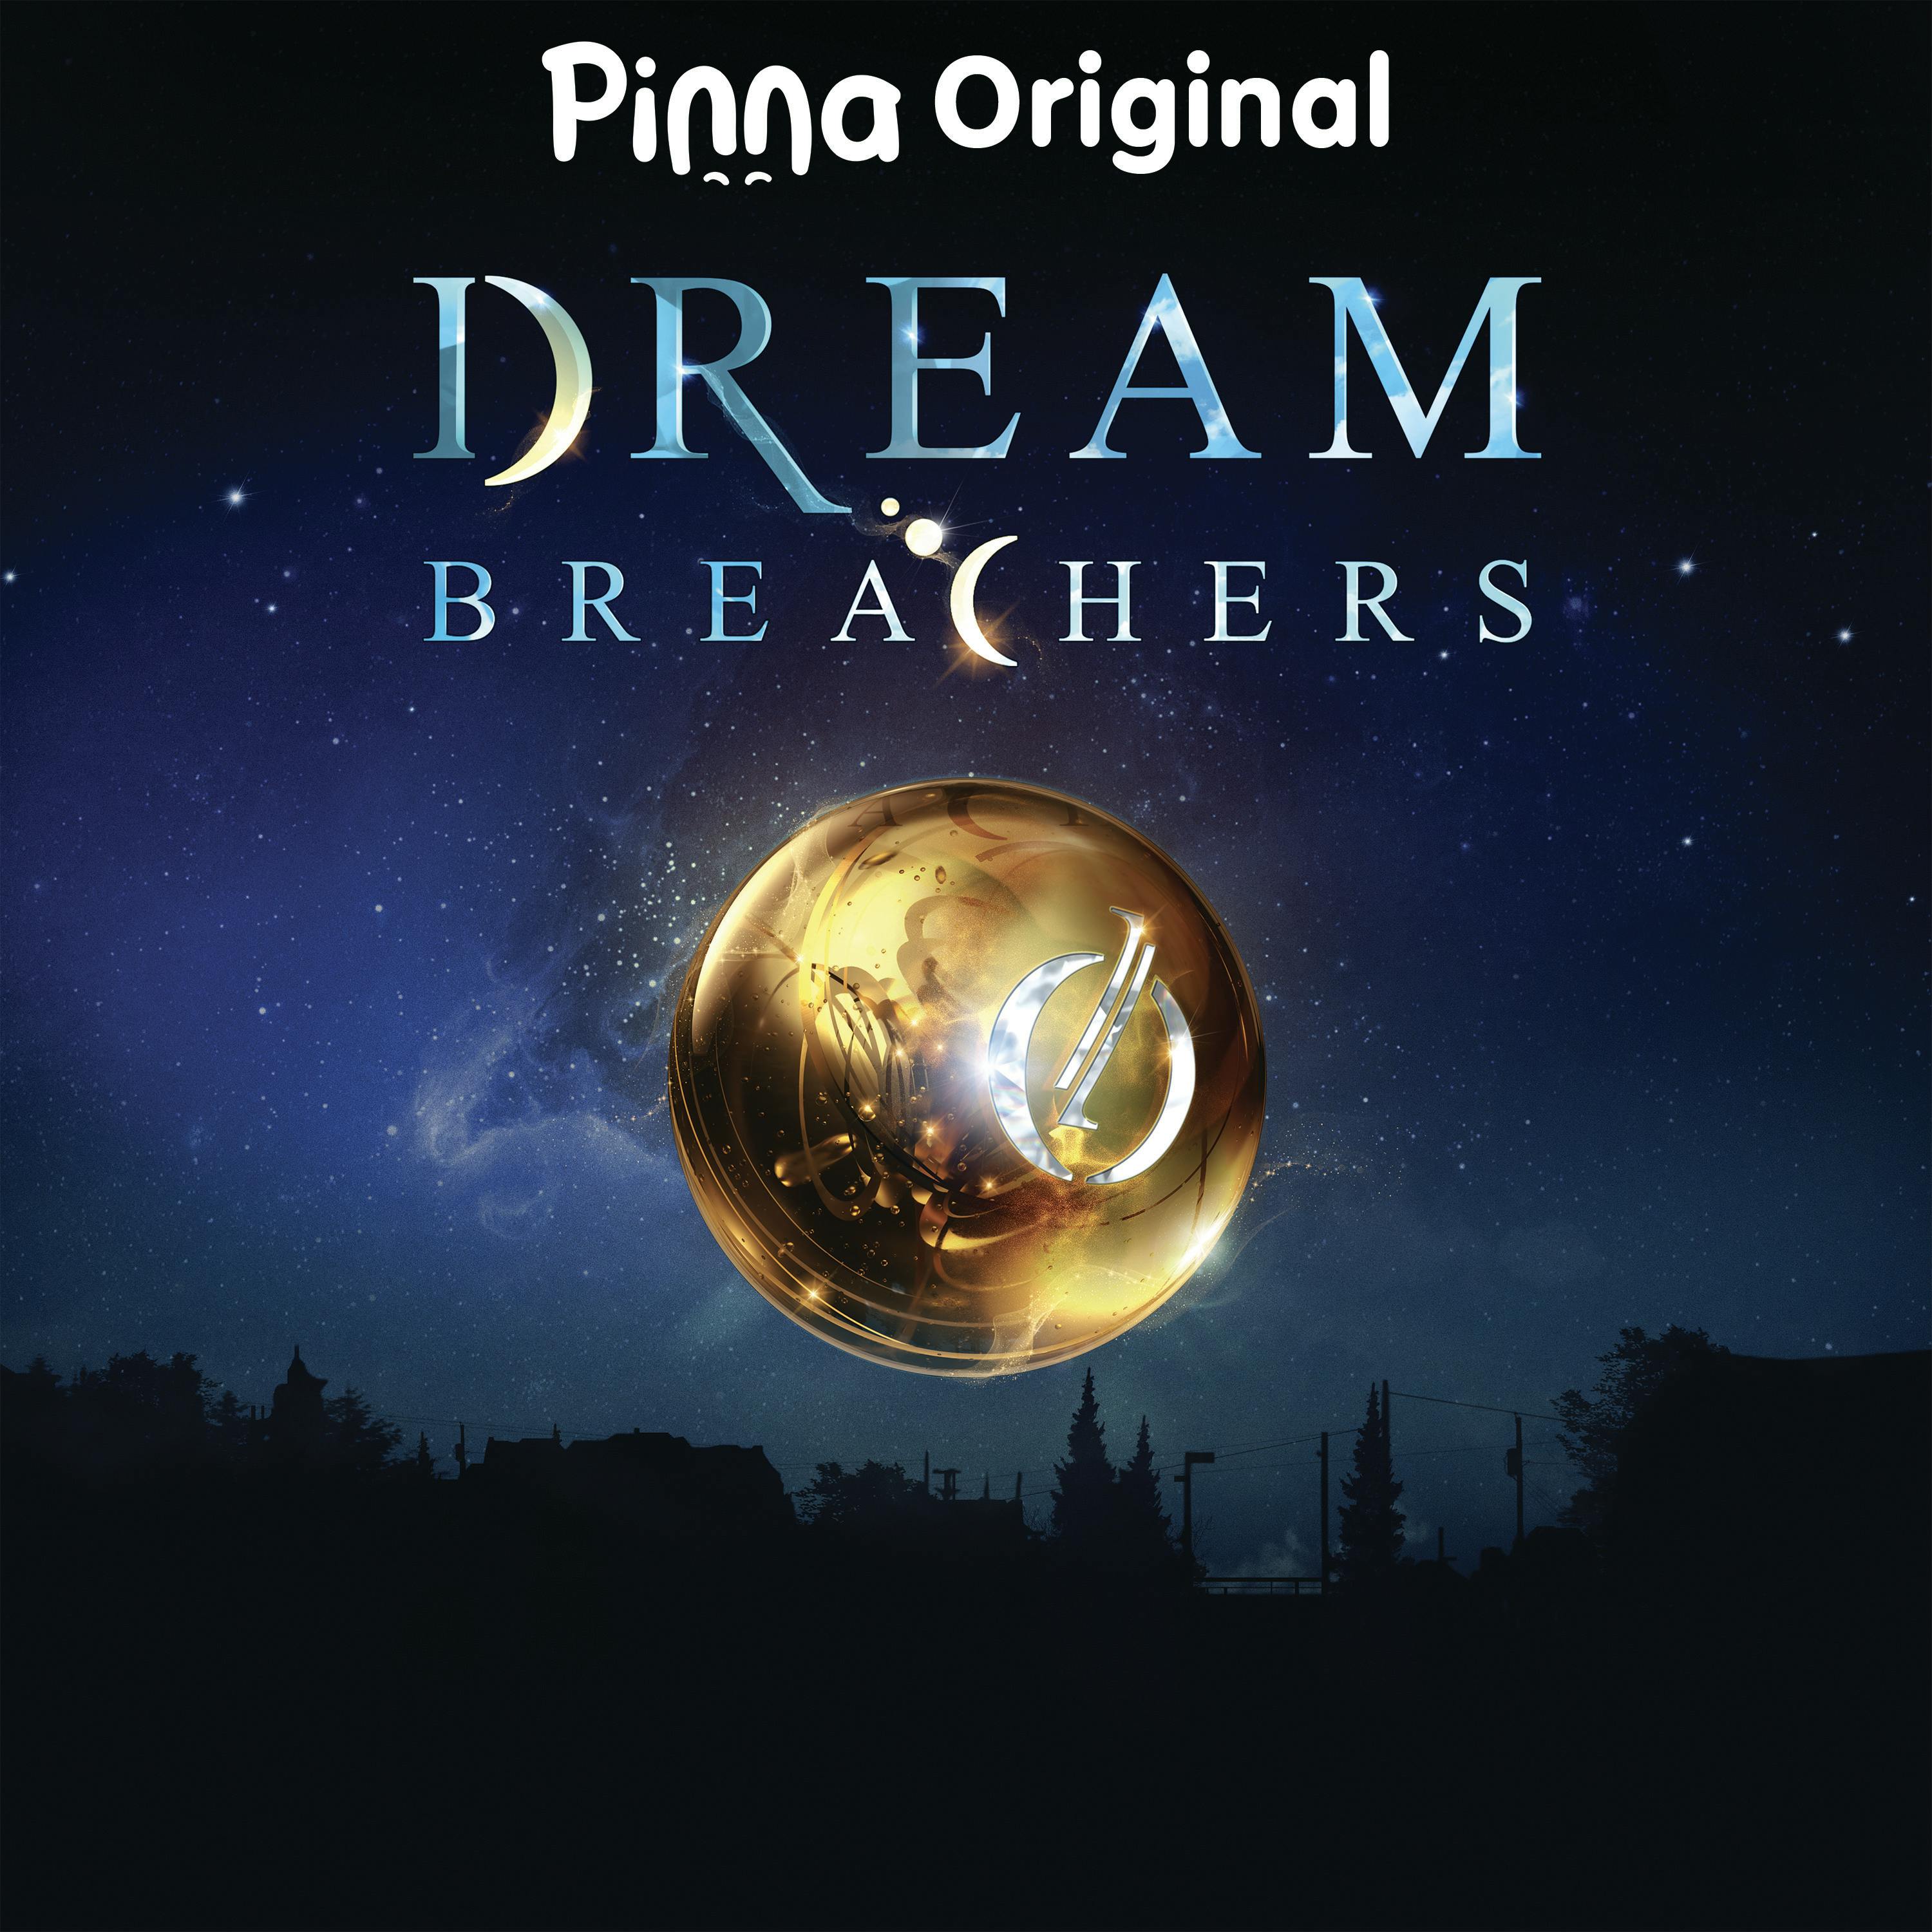 Dream Breachers podcast show image